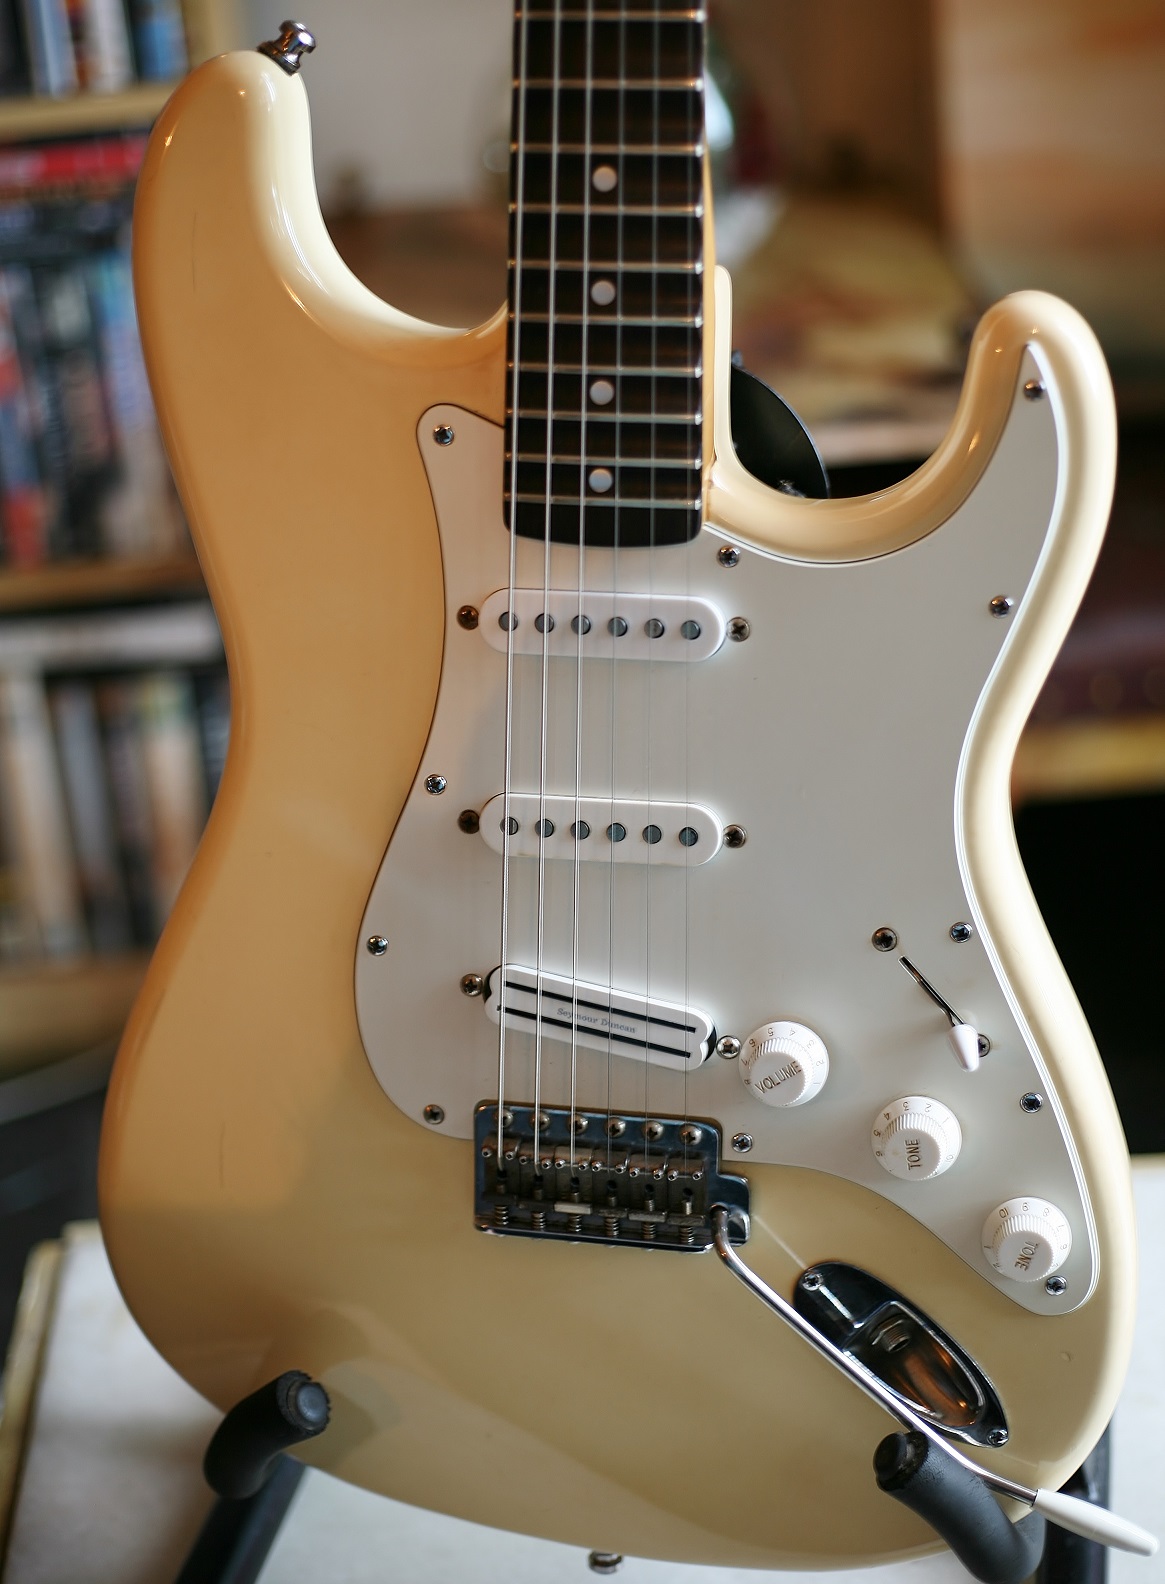 Produto - Fender Stratocaster St-72 (1989) - SomUmDois